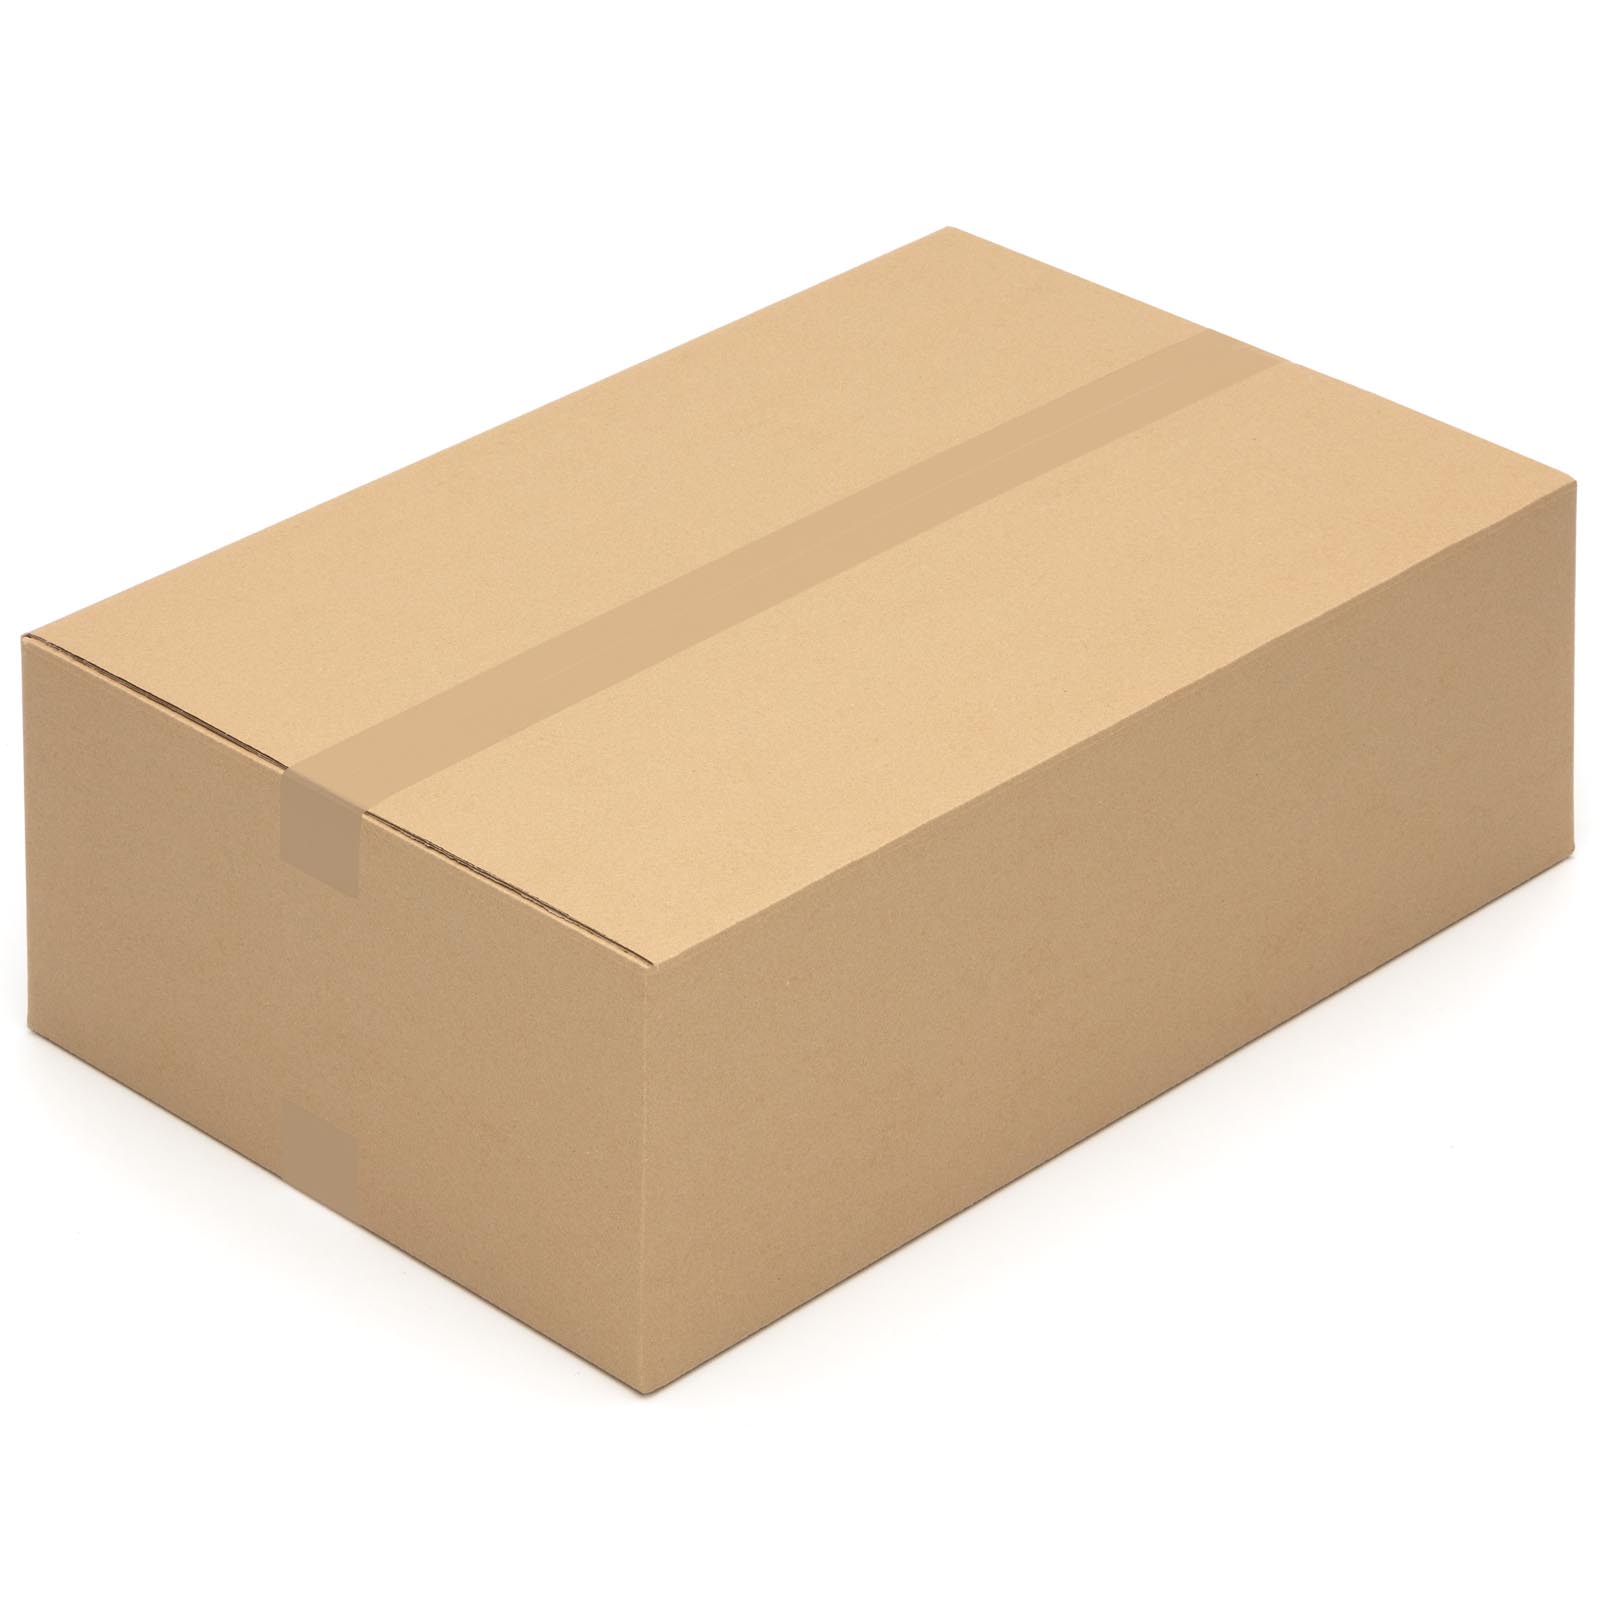 Faltkarton 600 x 400 x 200 mm Karton Schachtel Versandkarton Paketversand 25 Stück